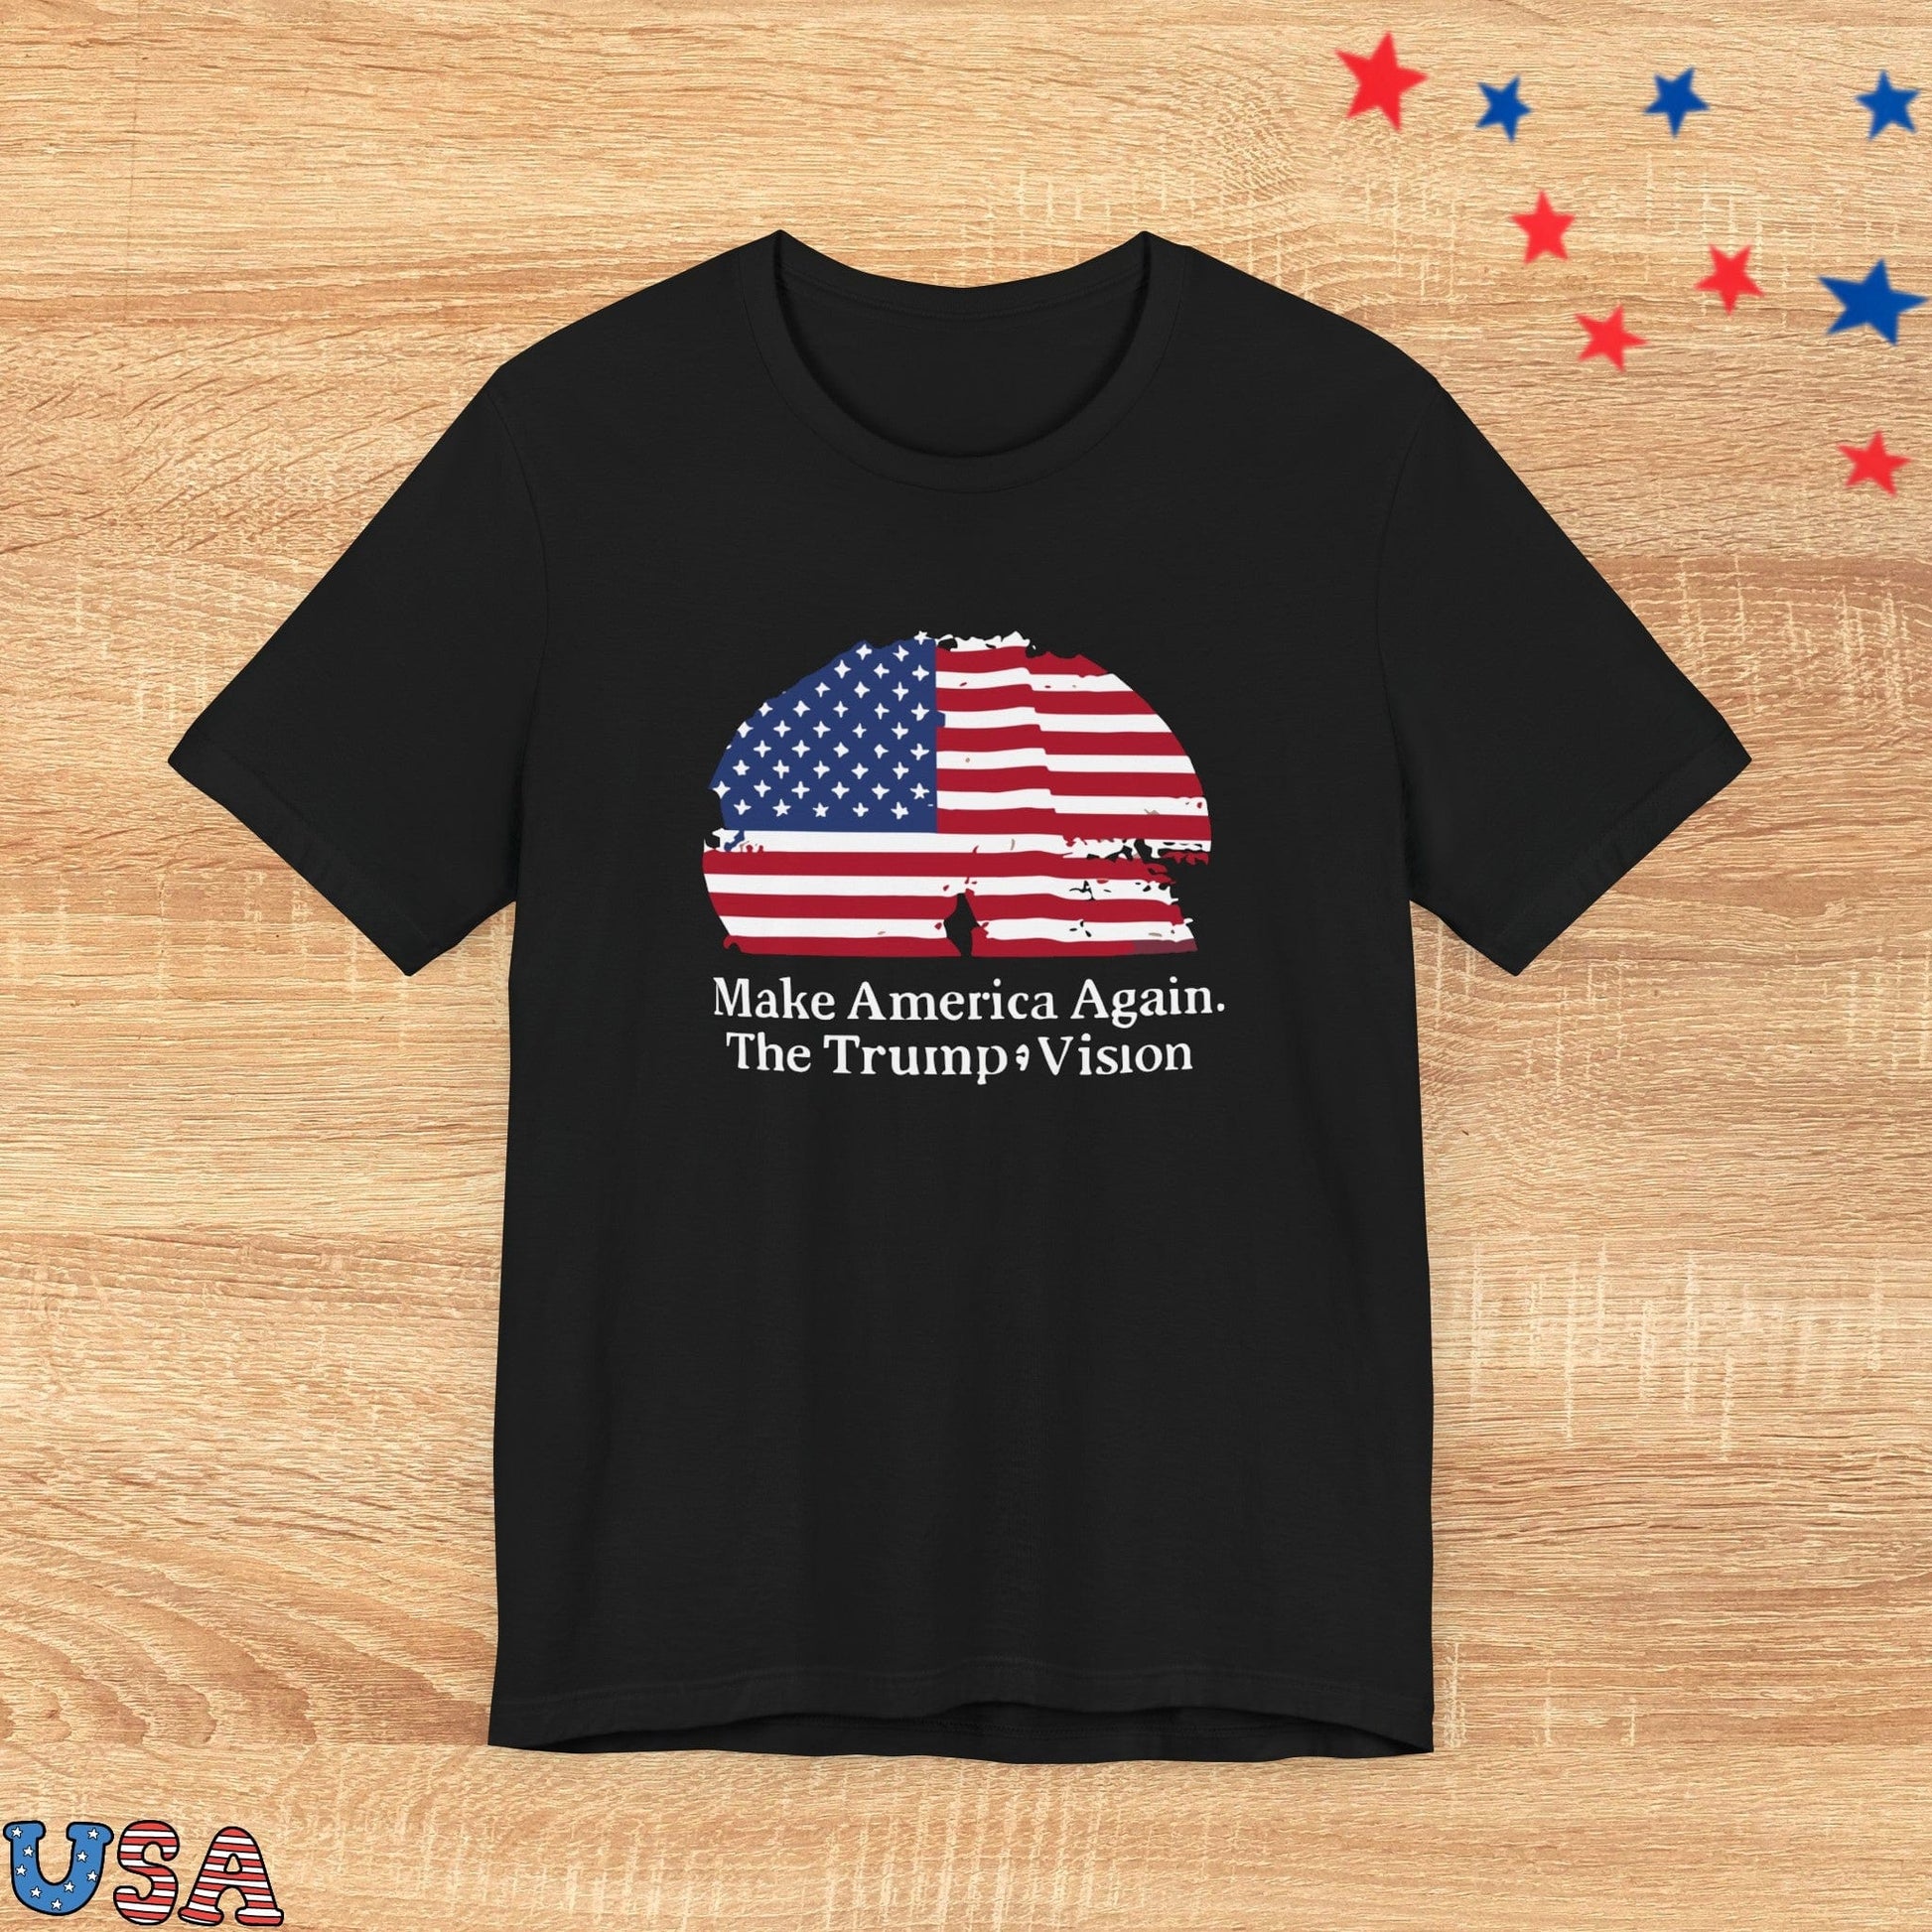 patriotic stars T-Shirt Black / XS Make America Again! The Trump Vision